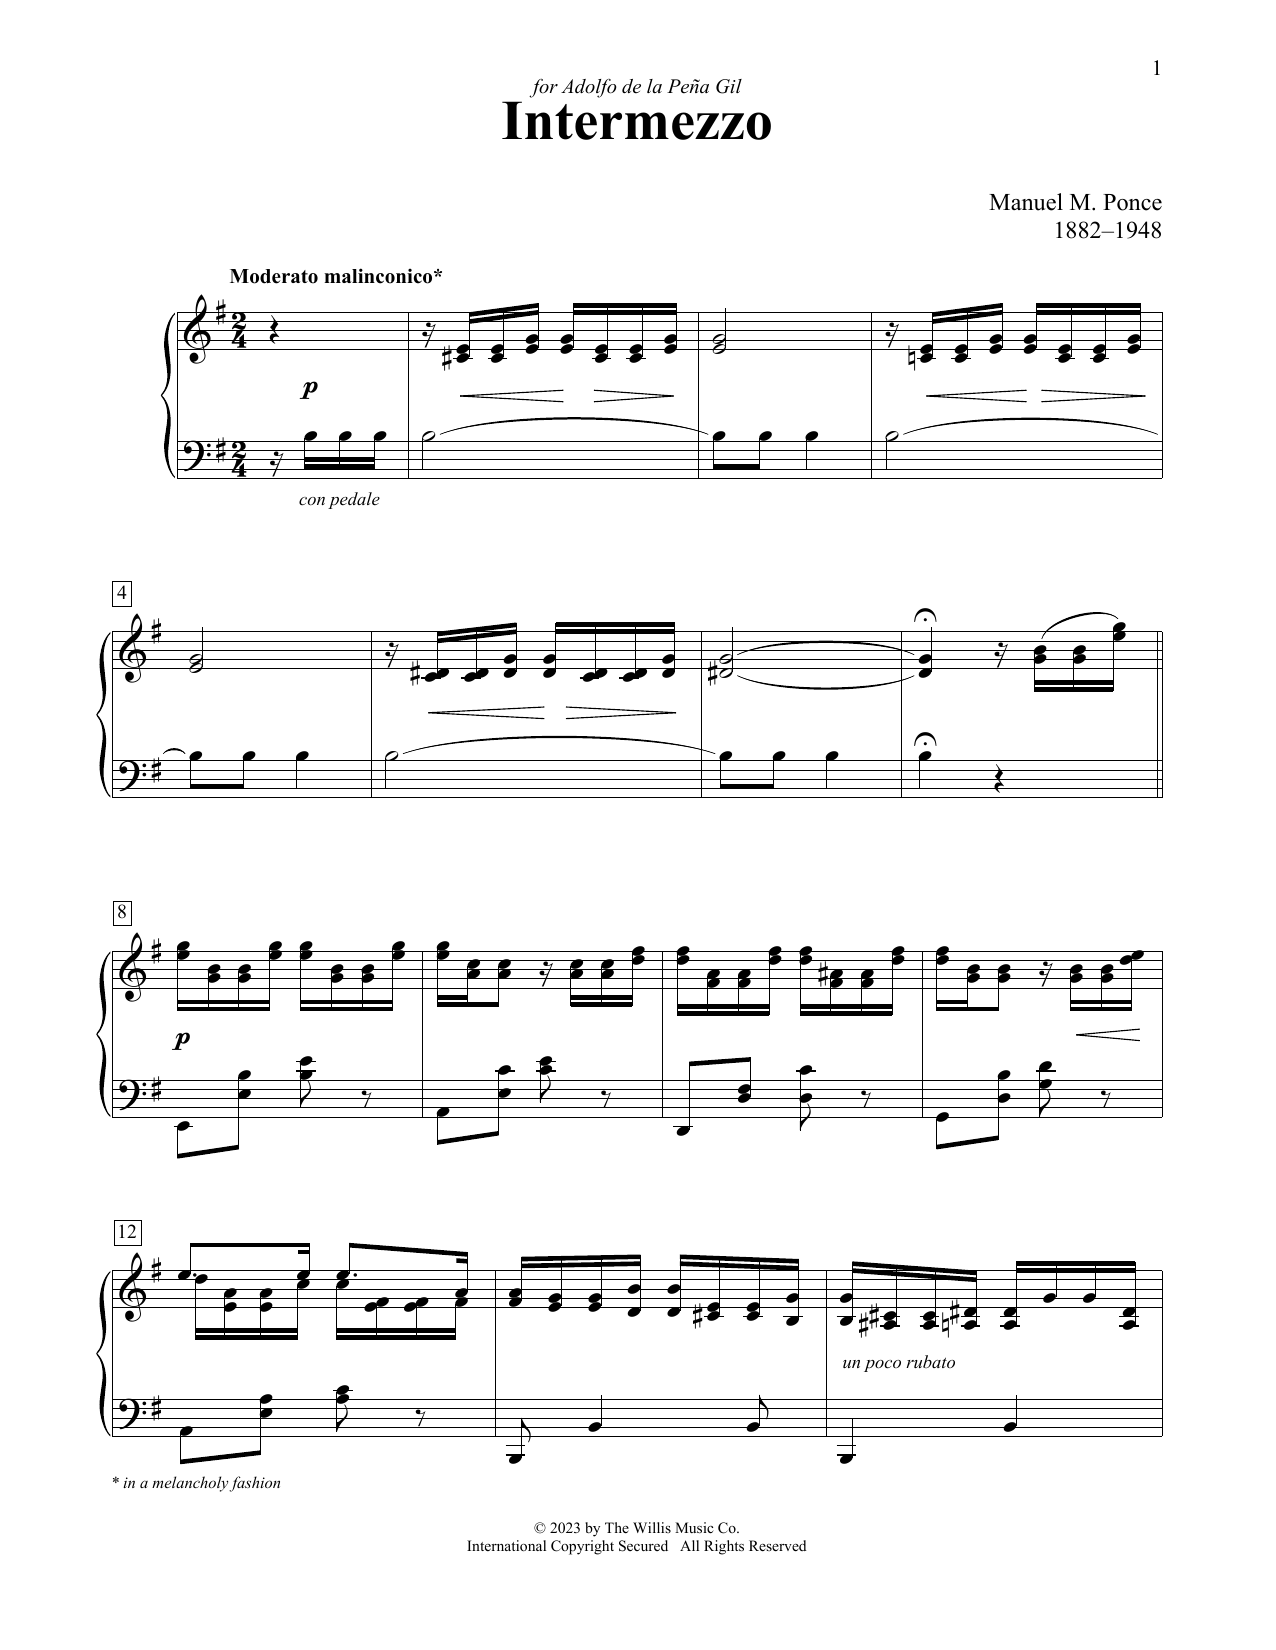 Manuel Ponce Intermezzo sheet music notes printable PDF score